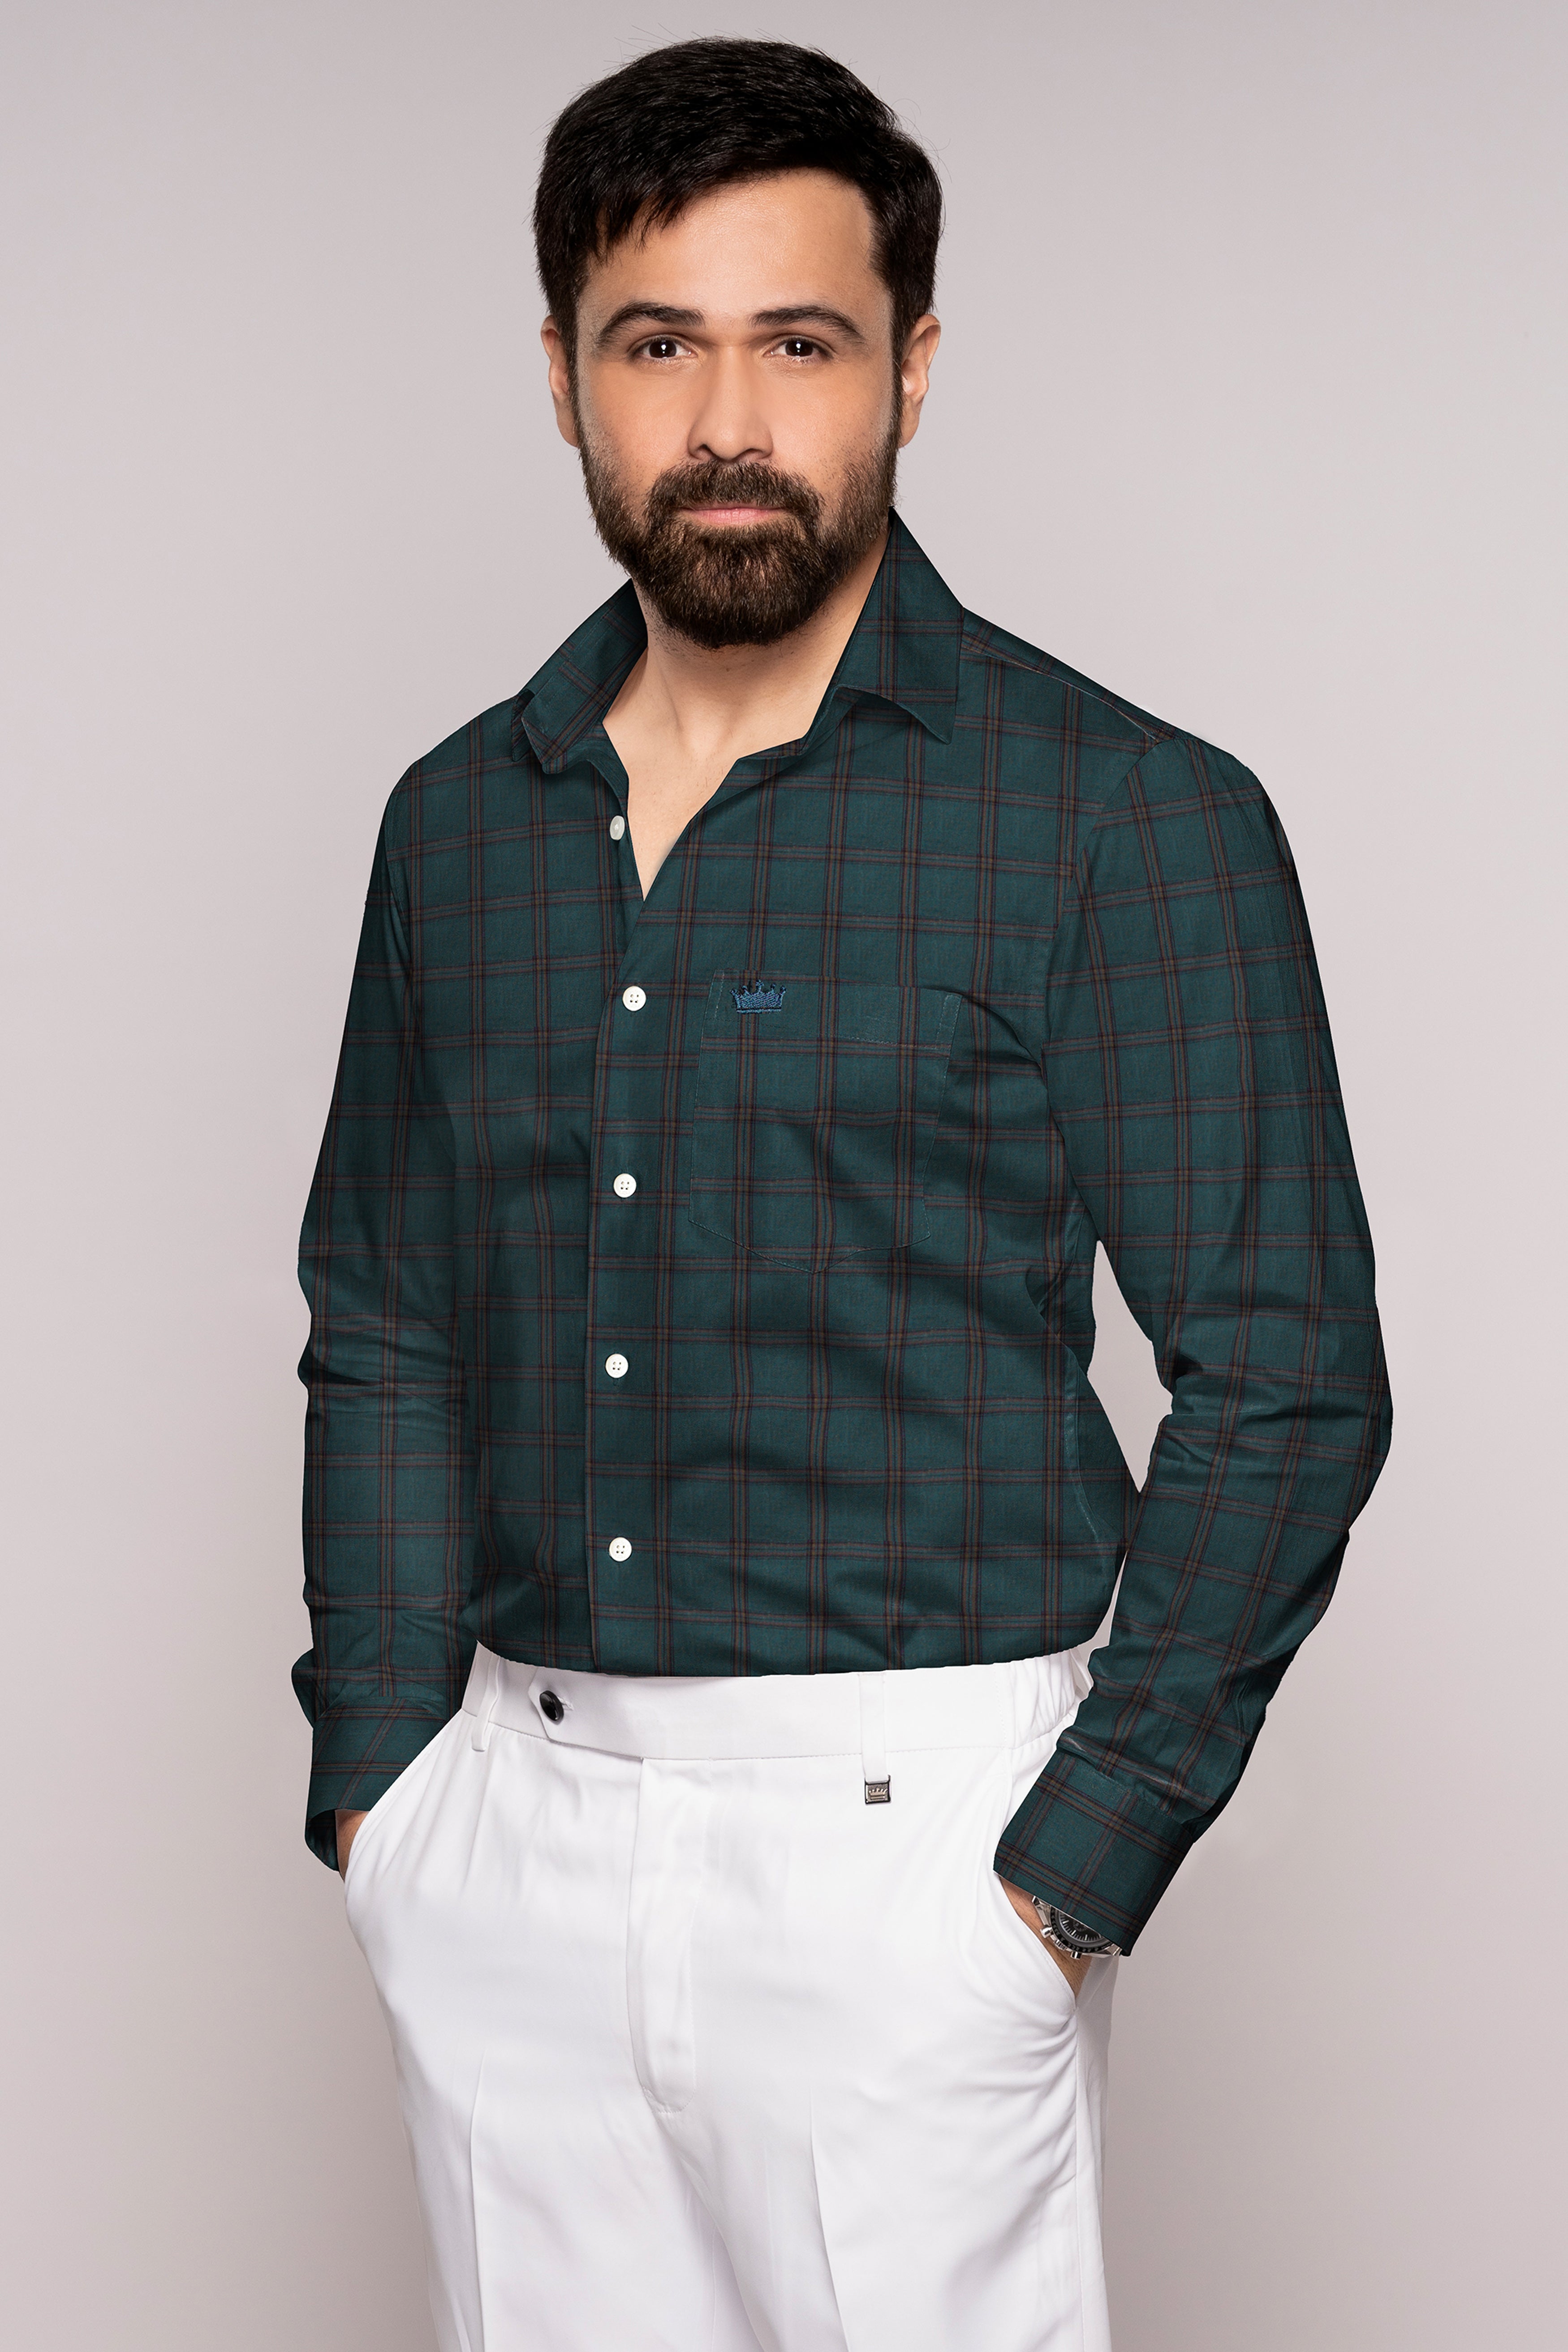 Gable Green Twill Plaid Premium Cotton Shirt